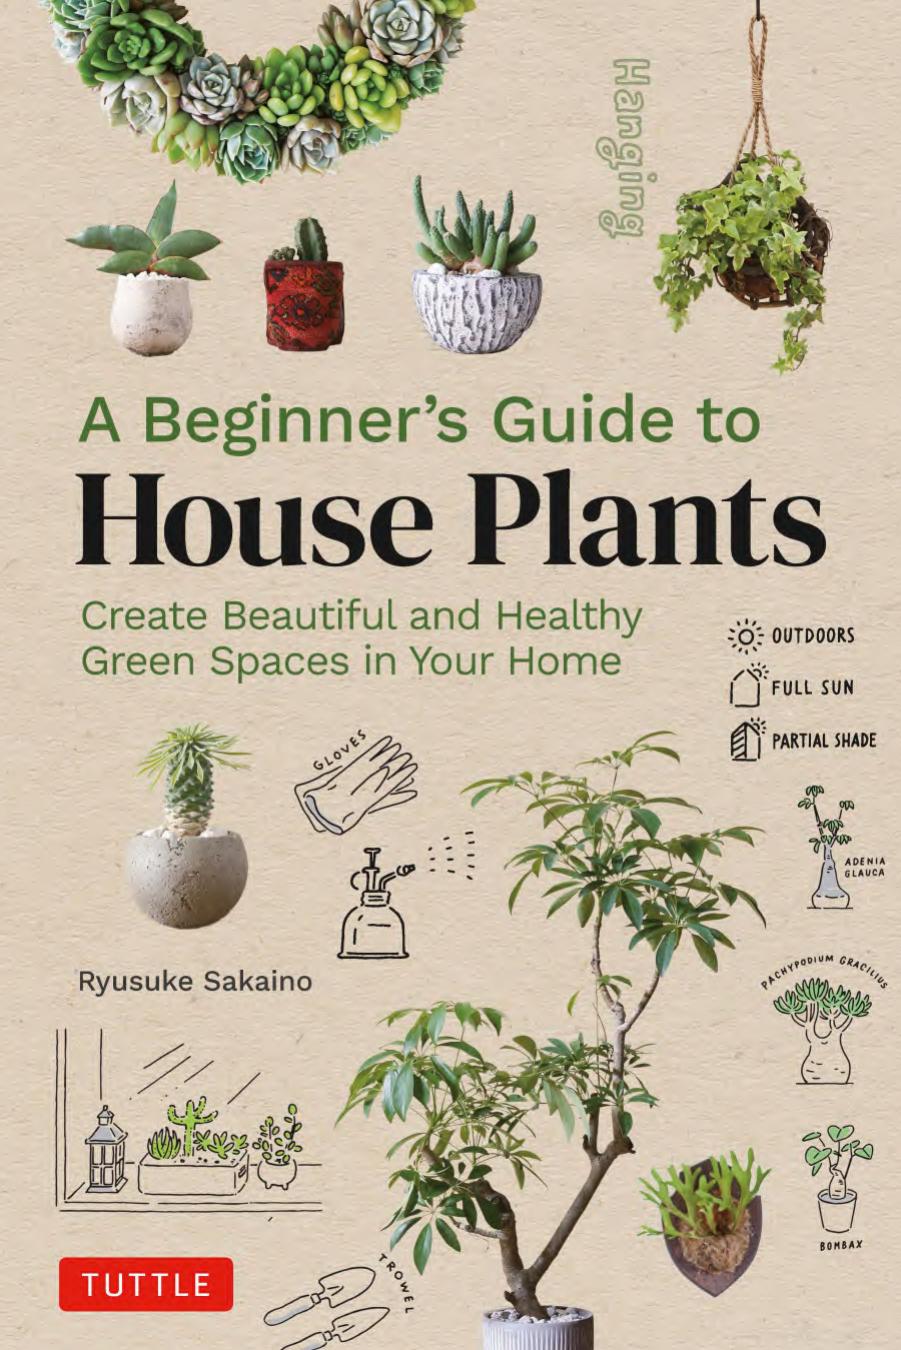 A Beginner's Guide to House Plants by Ryusuke Sakaino